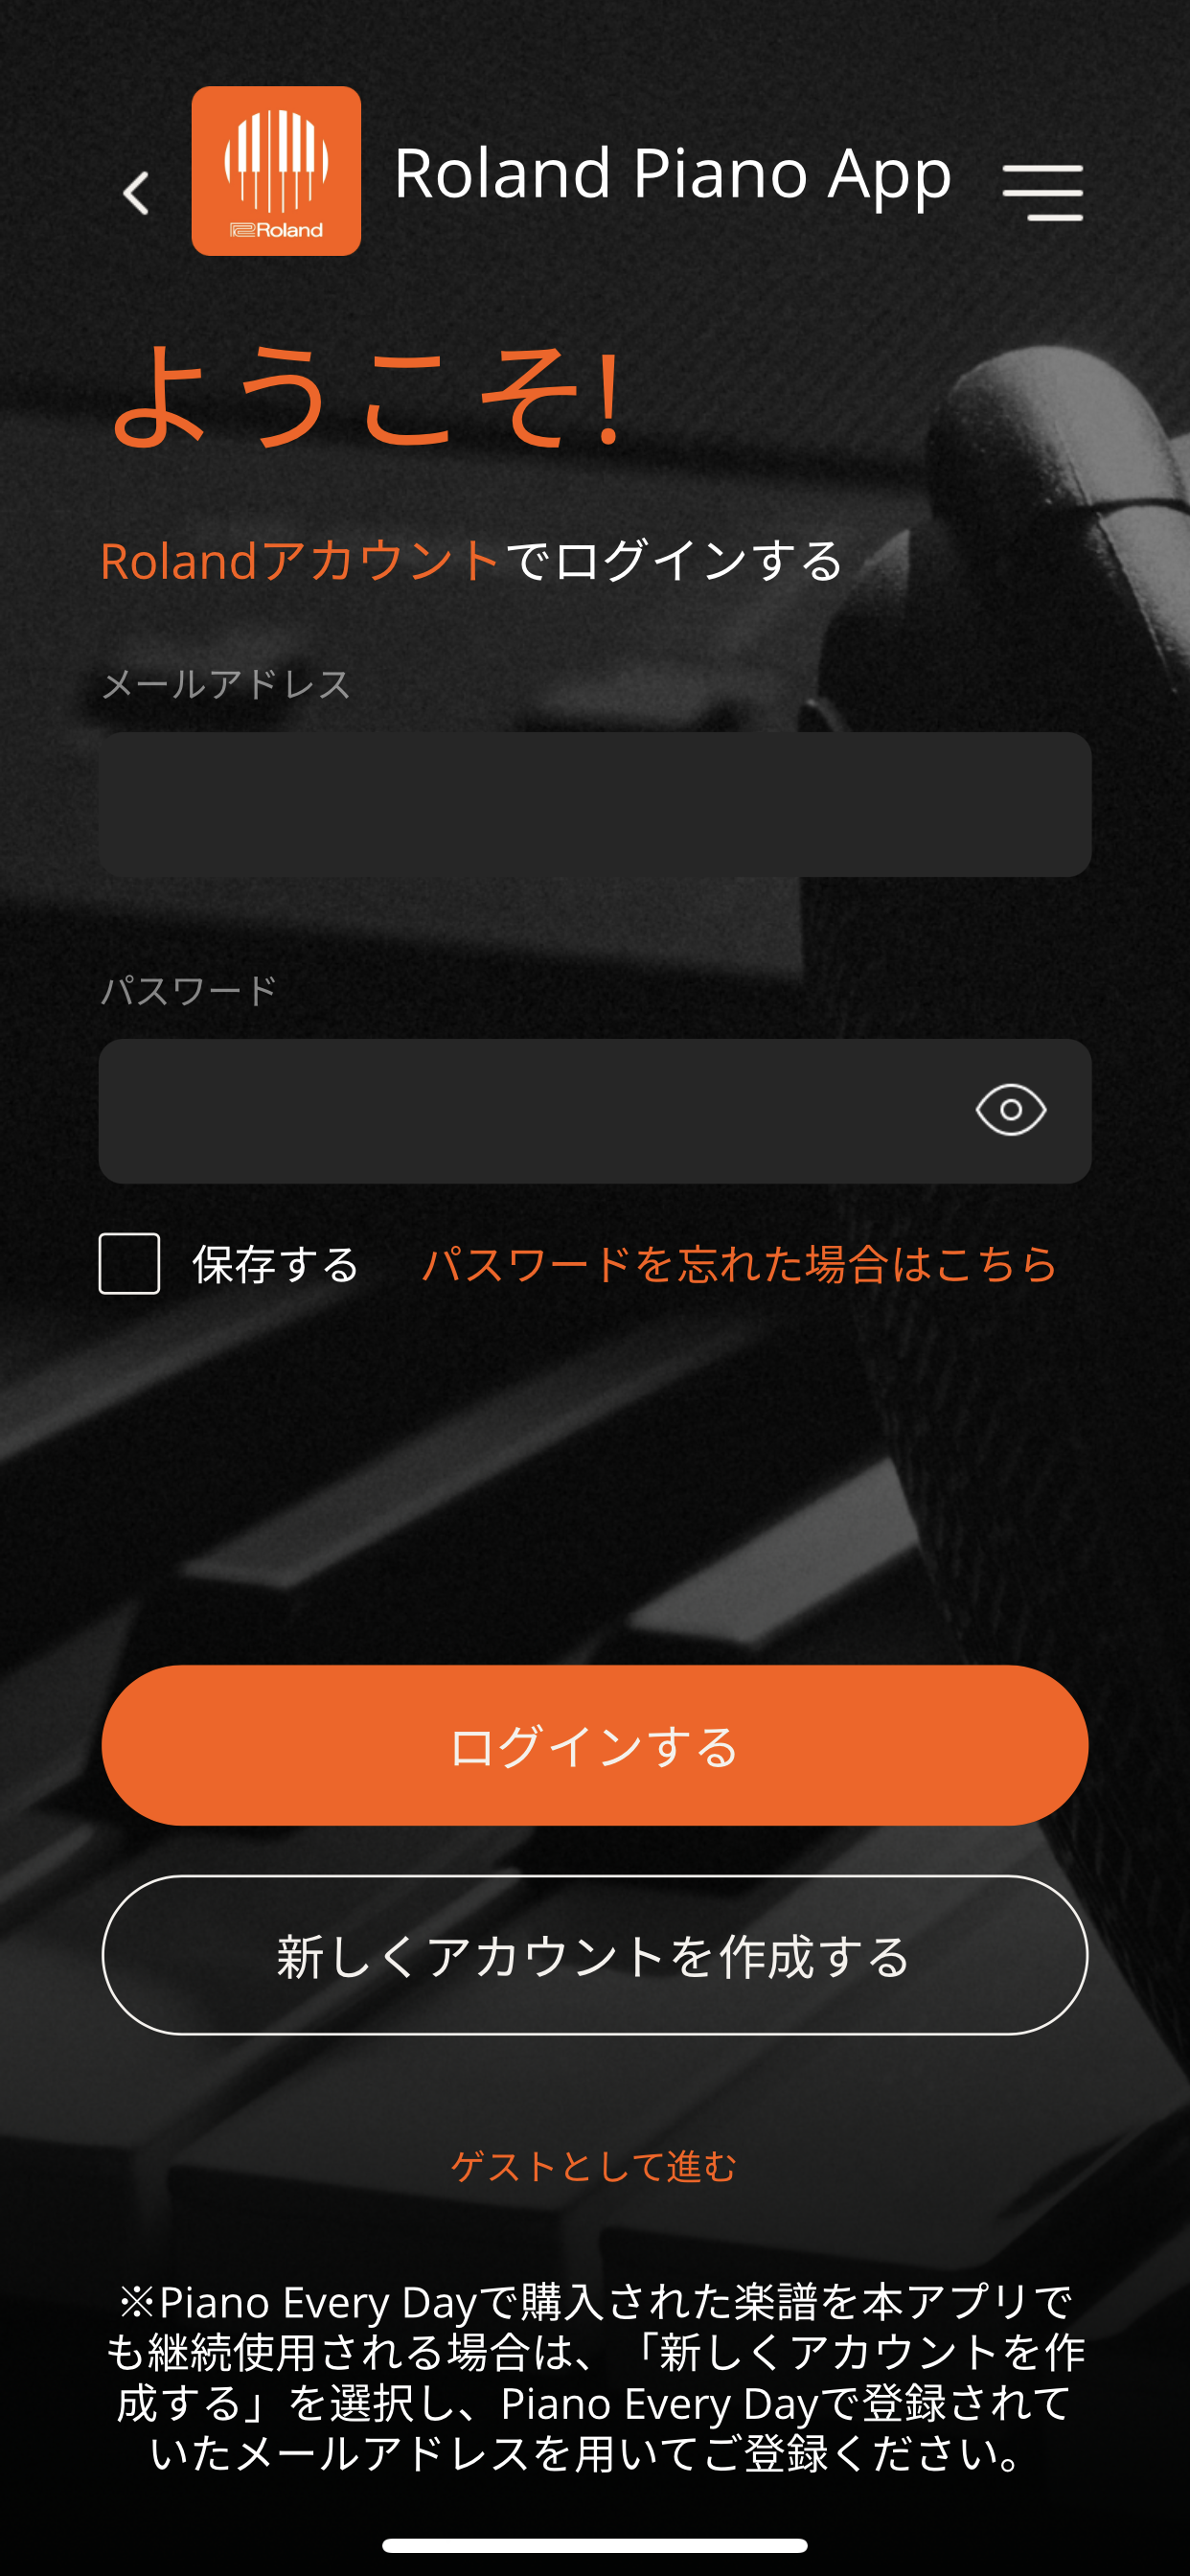 roland_piano_app_login_jp.png